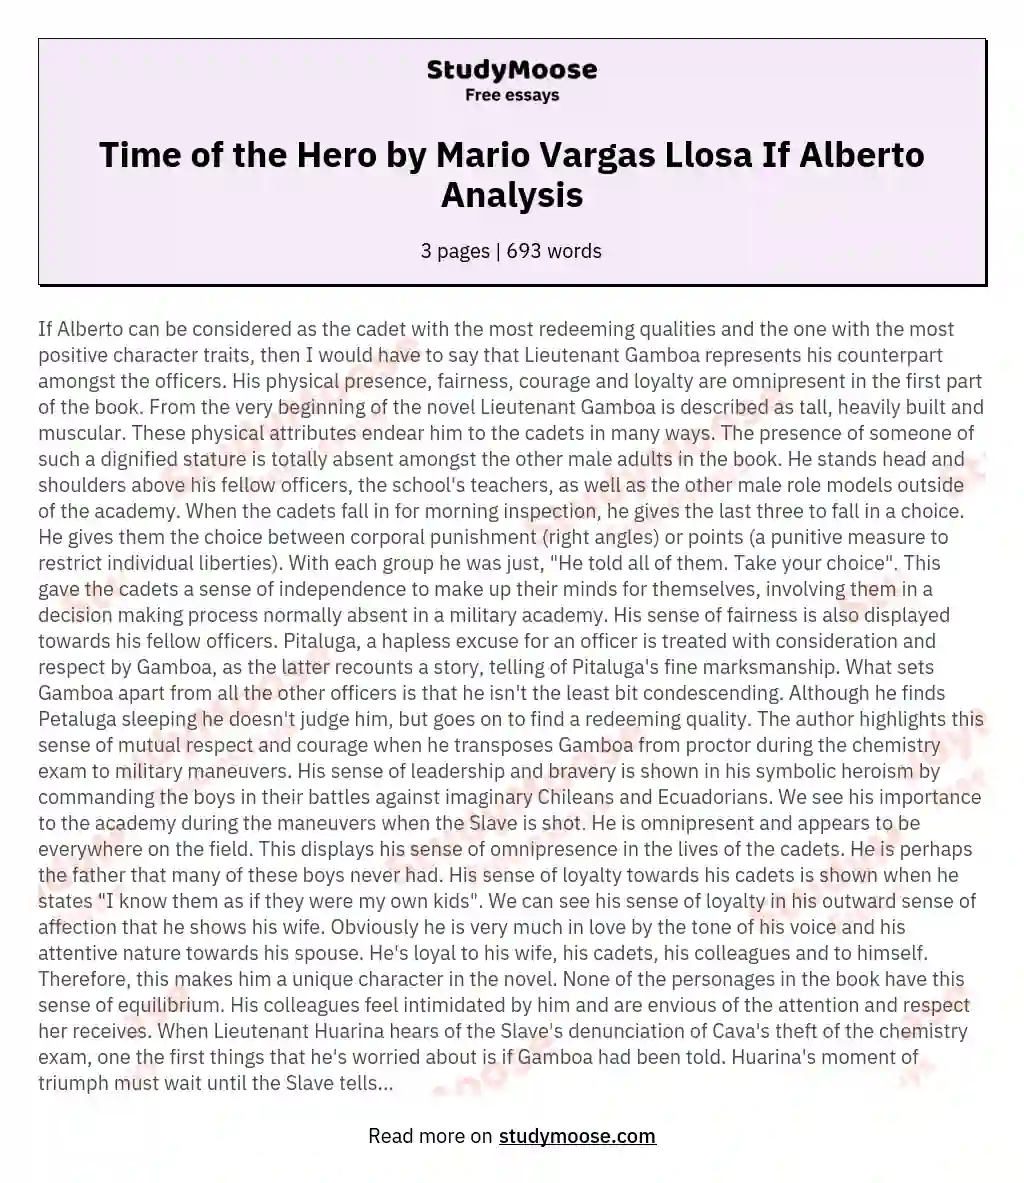 Time of the Hero by Mario Vargas Llosa If Alberto Analysis